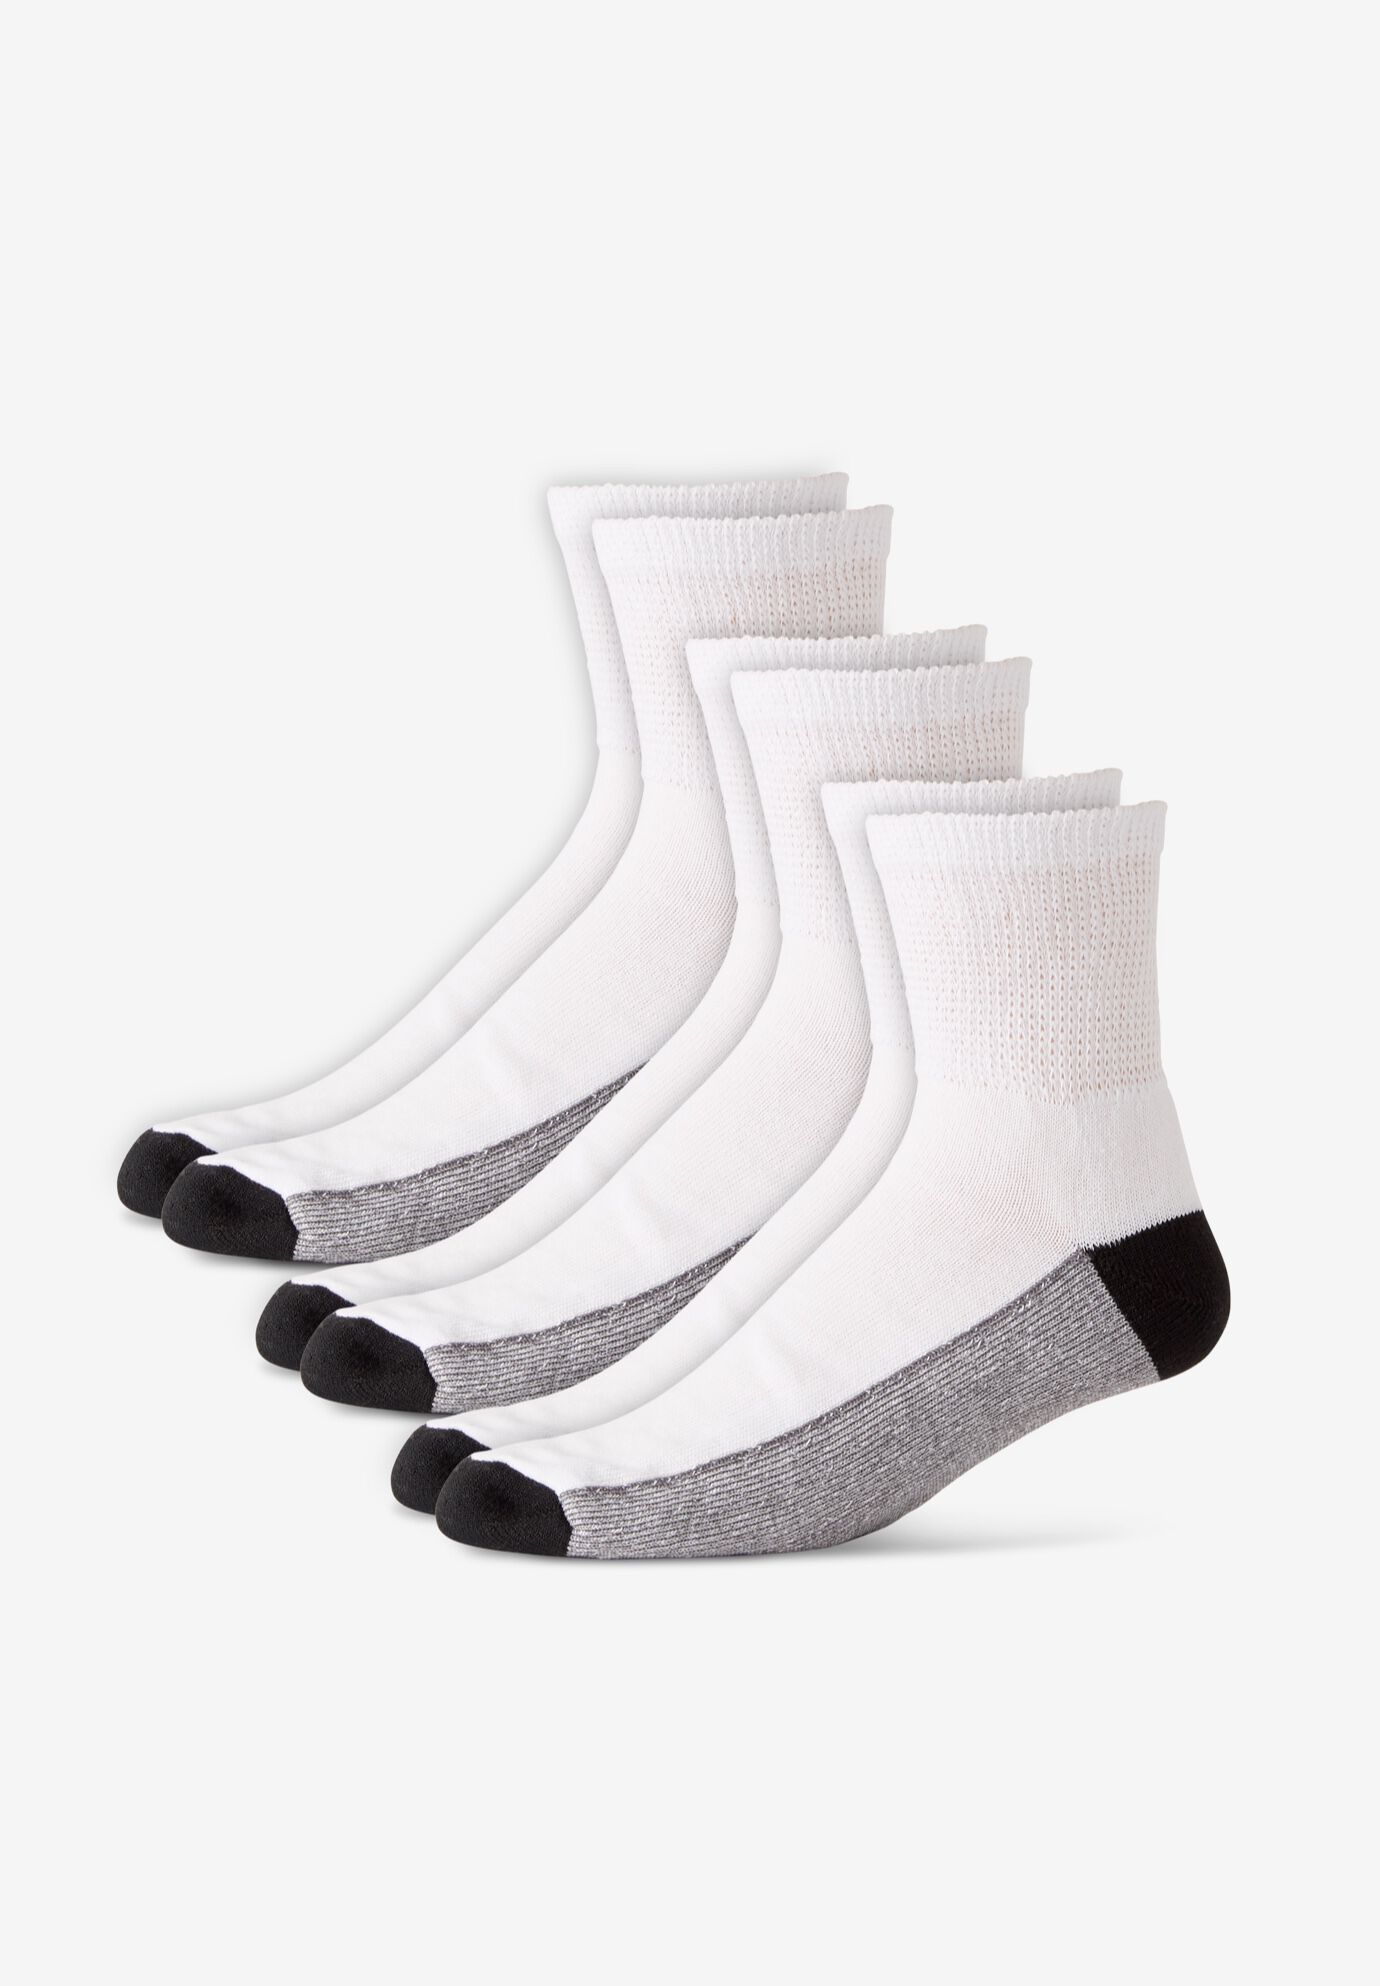 KingSize Mens Big & Tall Dress Socks 3-Pack 